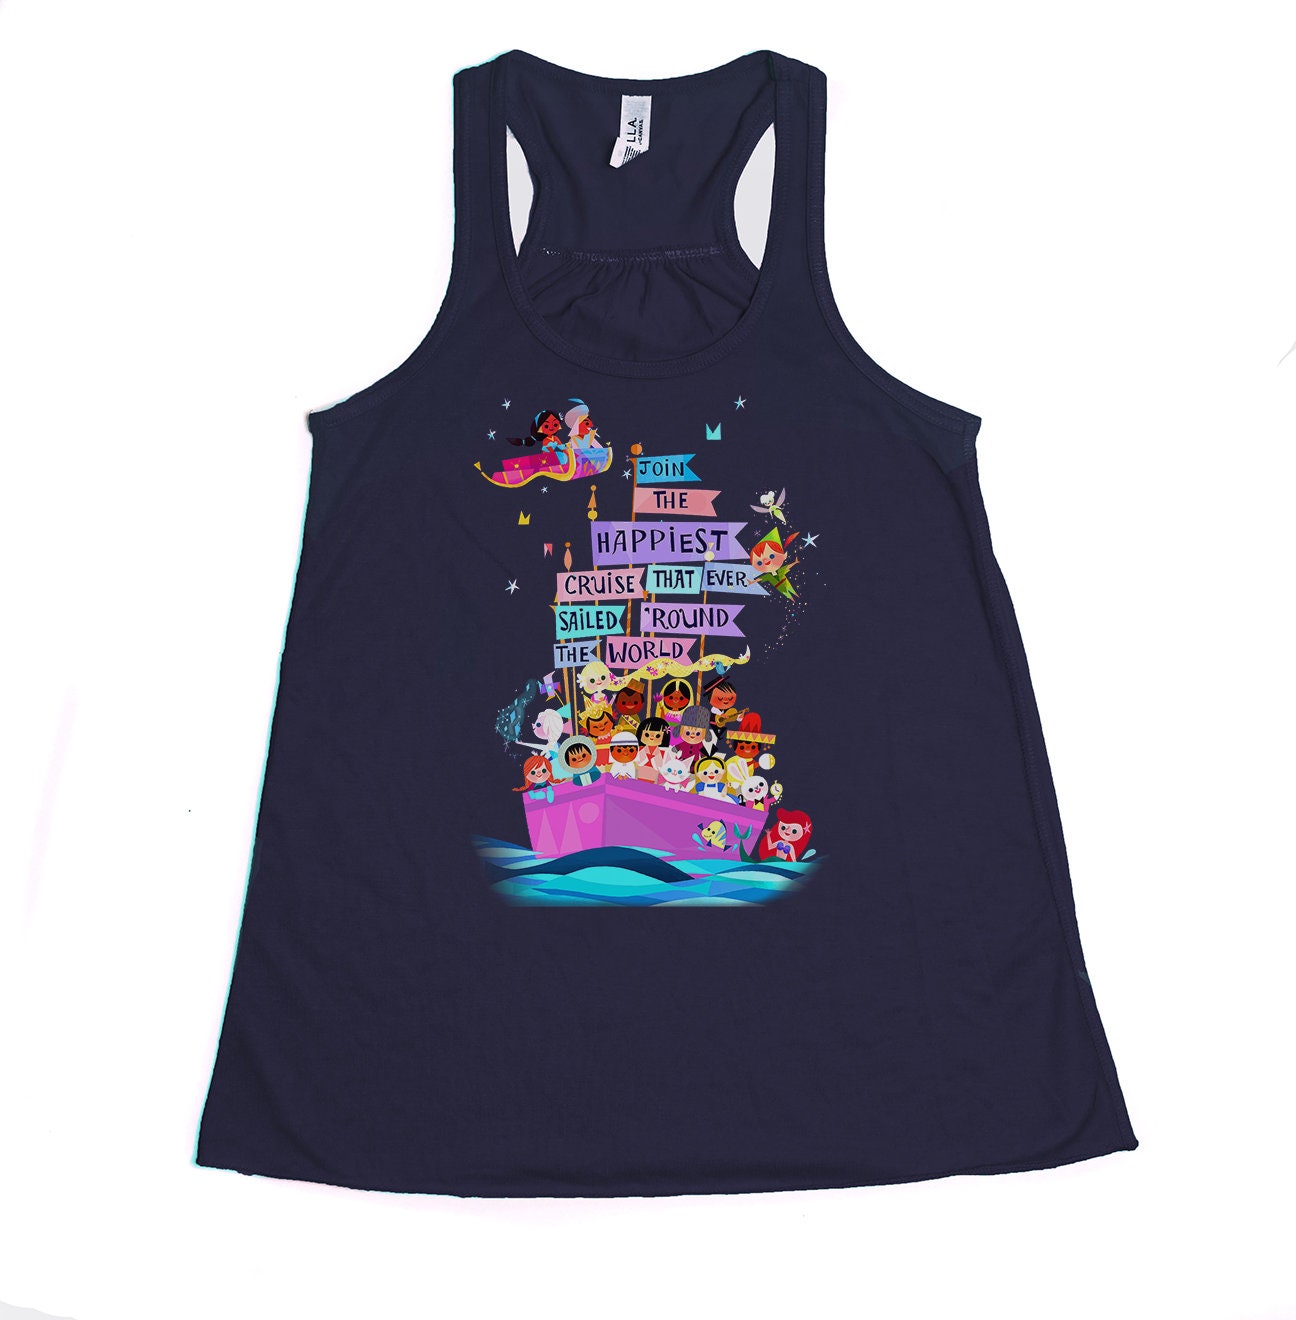 It's A Small World Tank Top / Disney World t-shirt / | Etsy